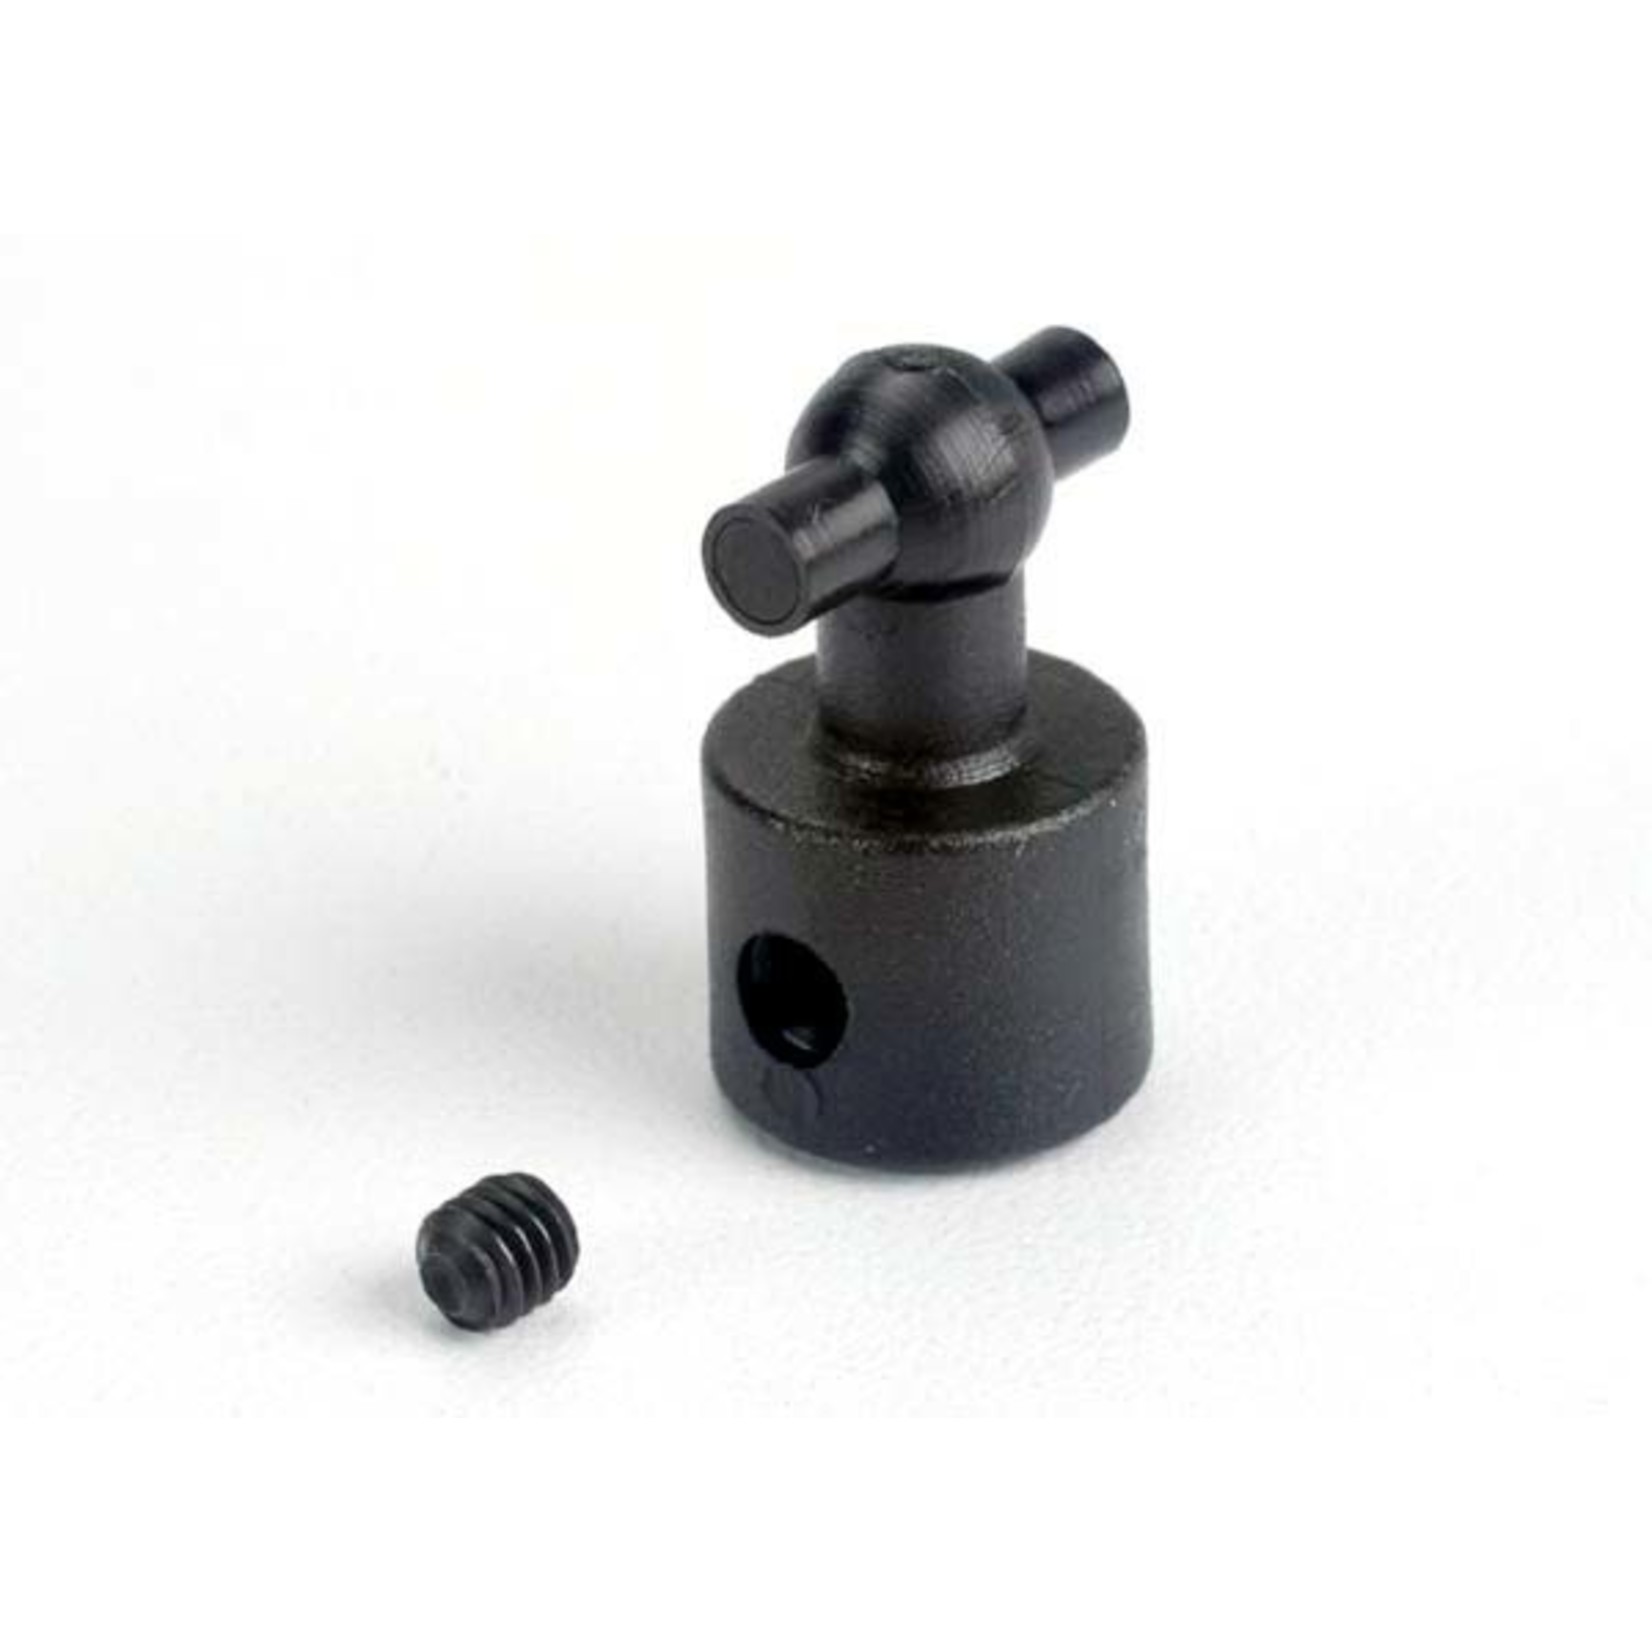 Traxxas 3827 - Motor drive cup/ set screw